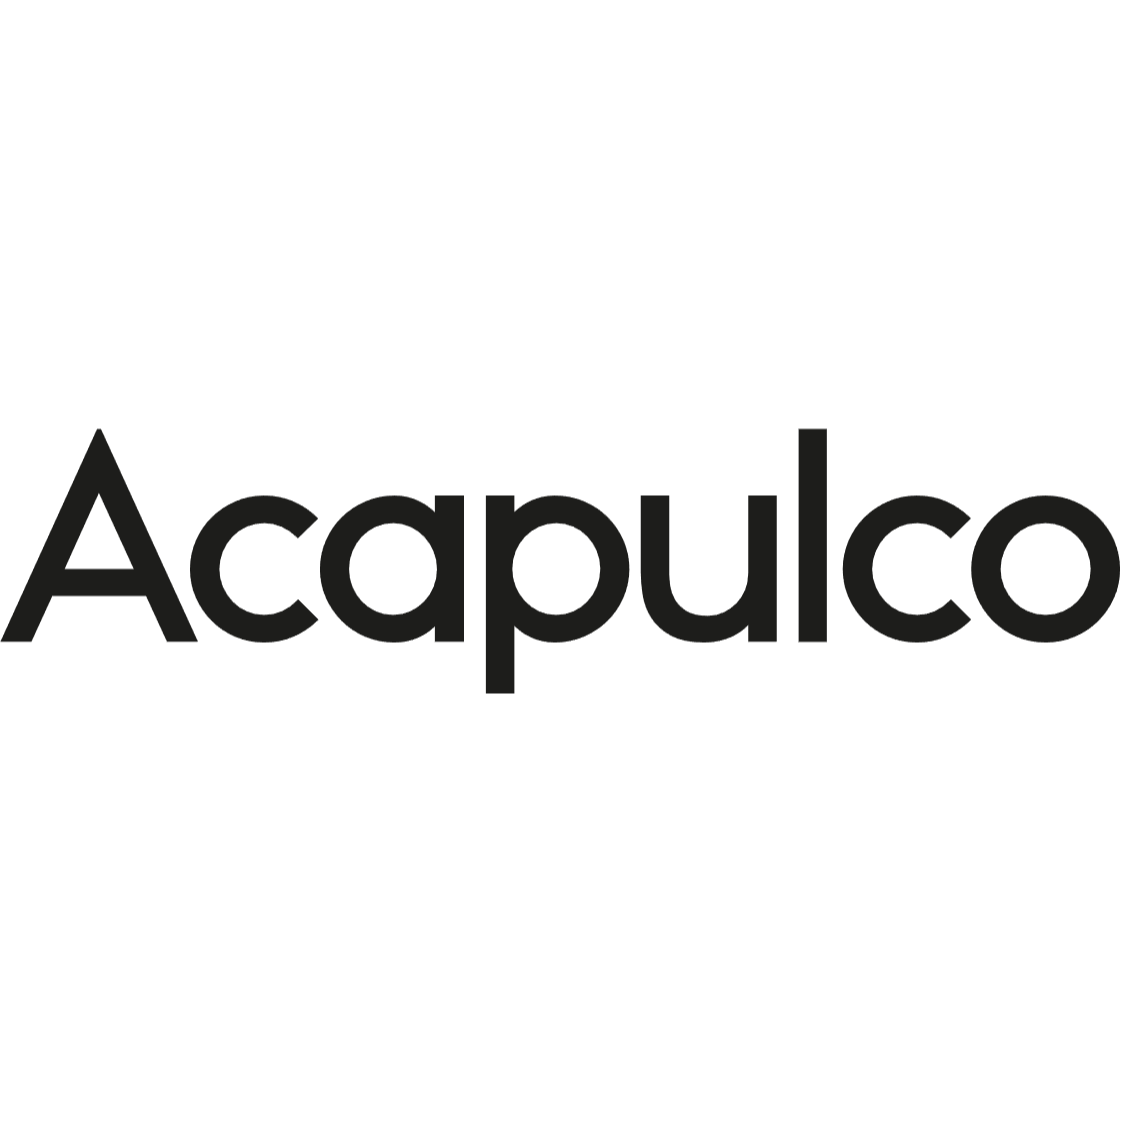 Acapulco Design in München - Logo